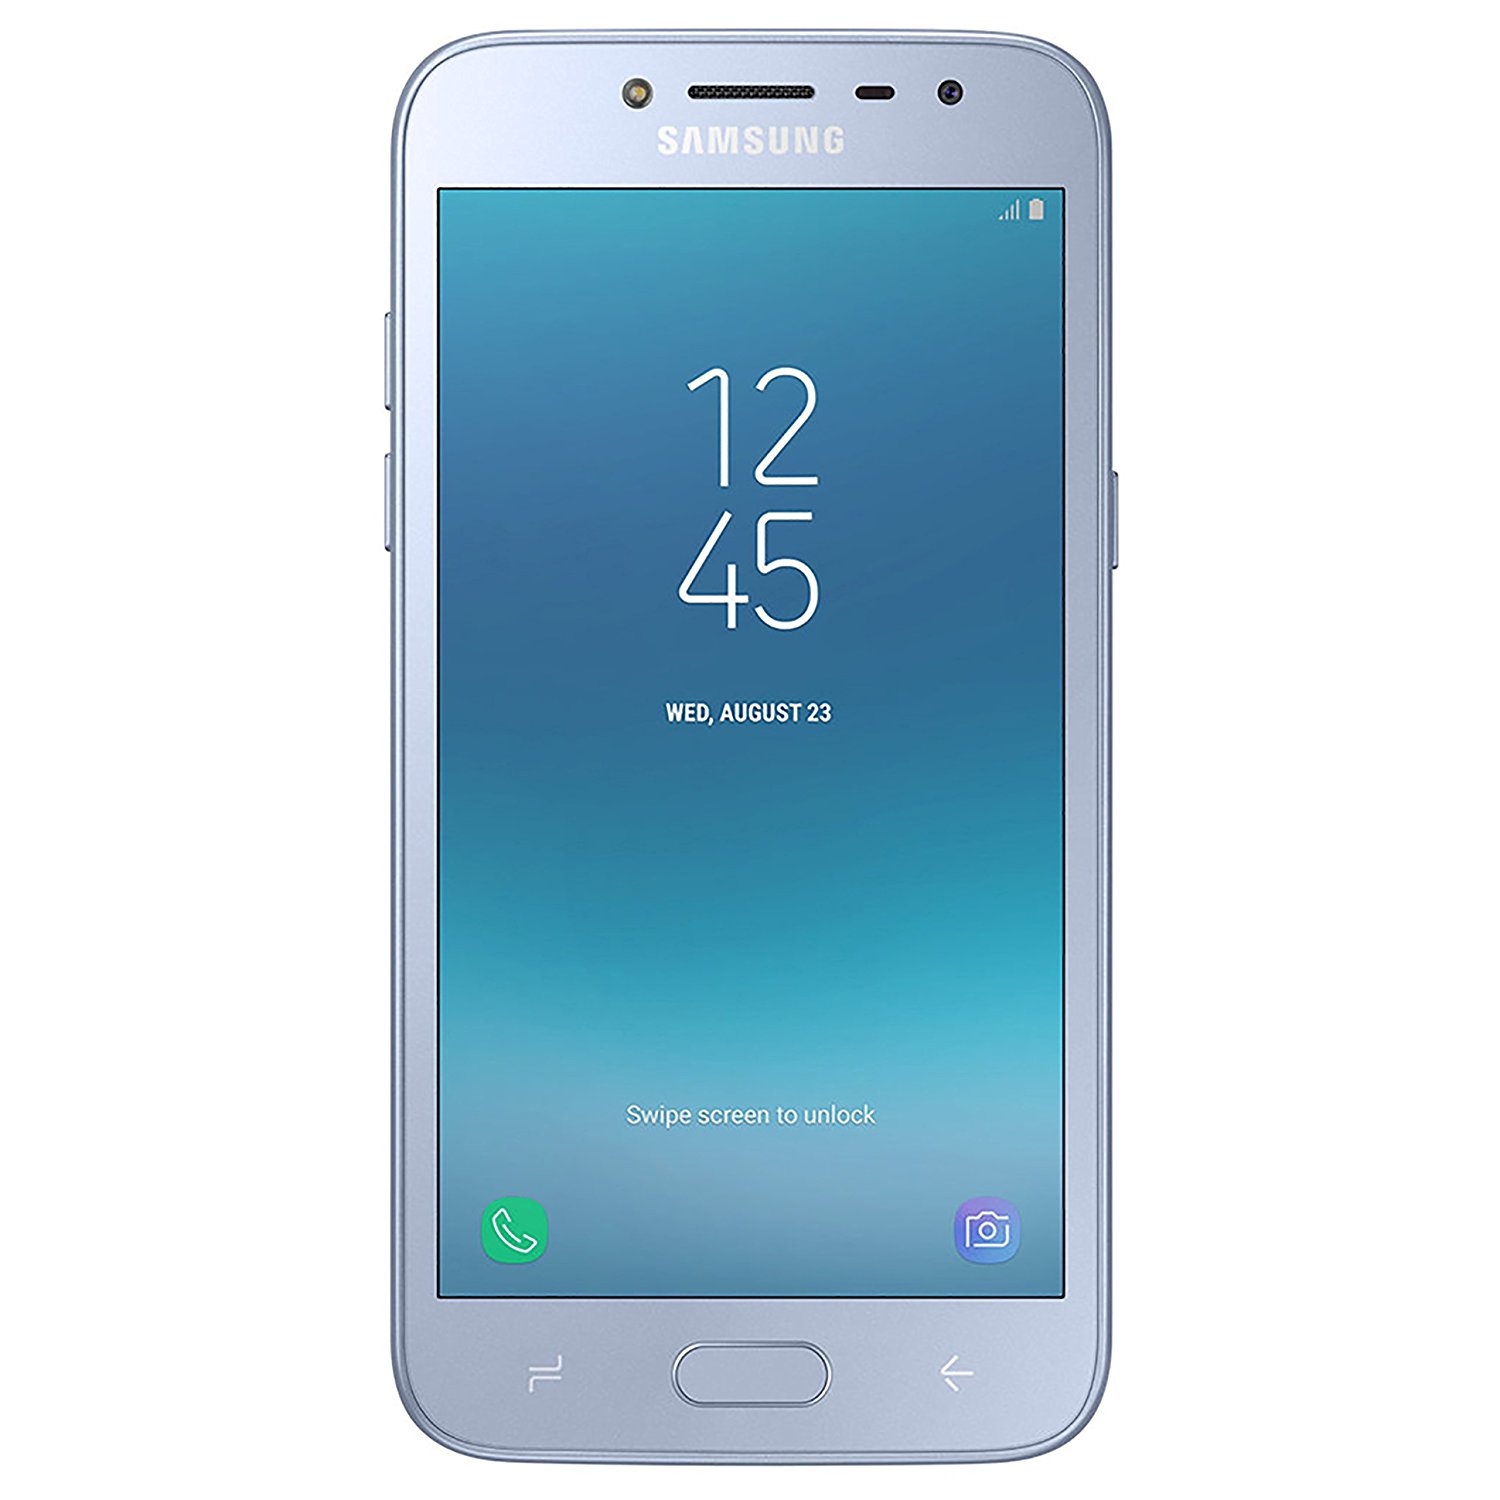 Samsung Galaxy J2 Pro J250M Unlocked GSM 4G LTE Android Phone w/ 8MP Camera - Silver